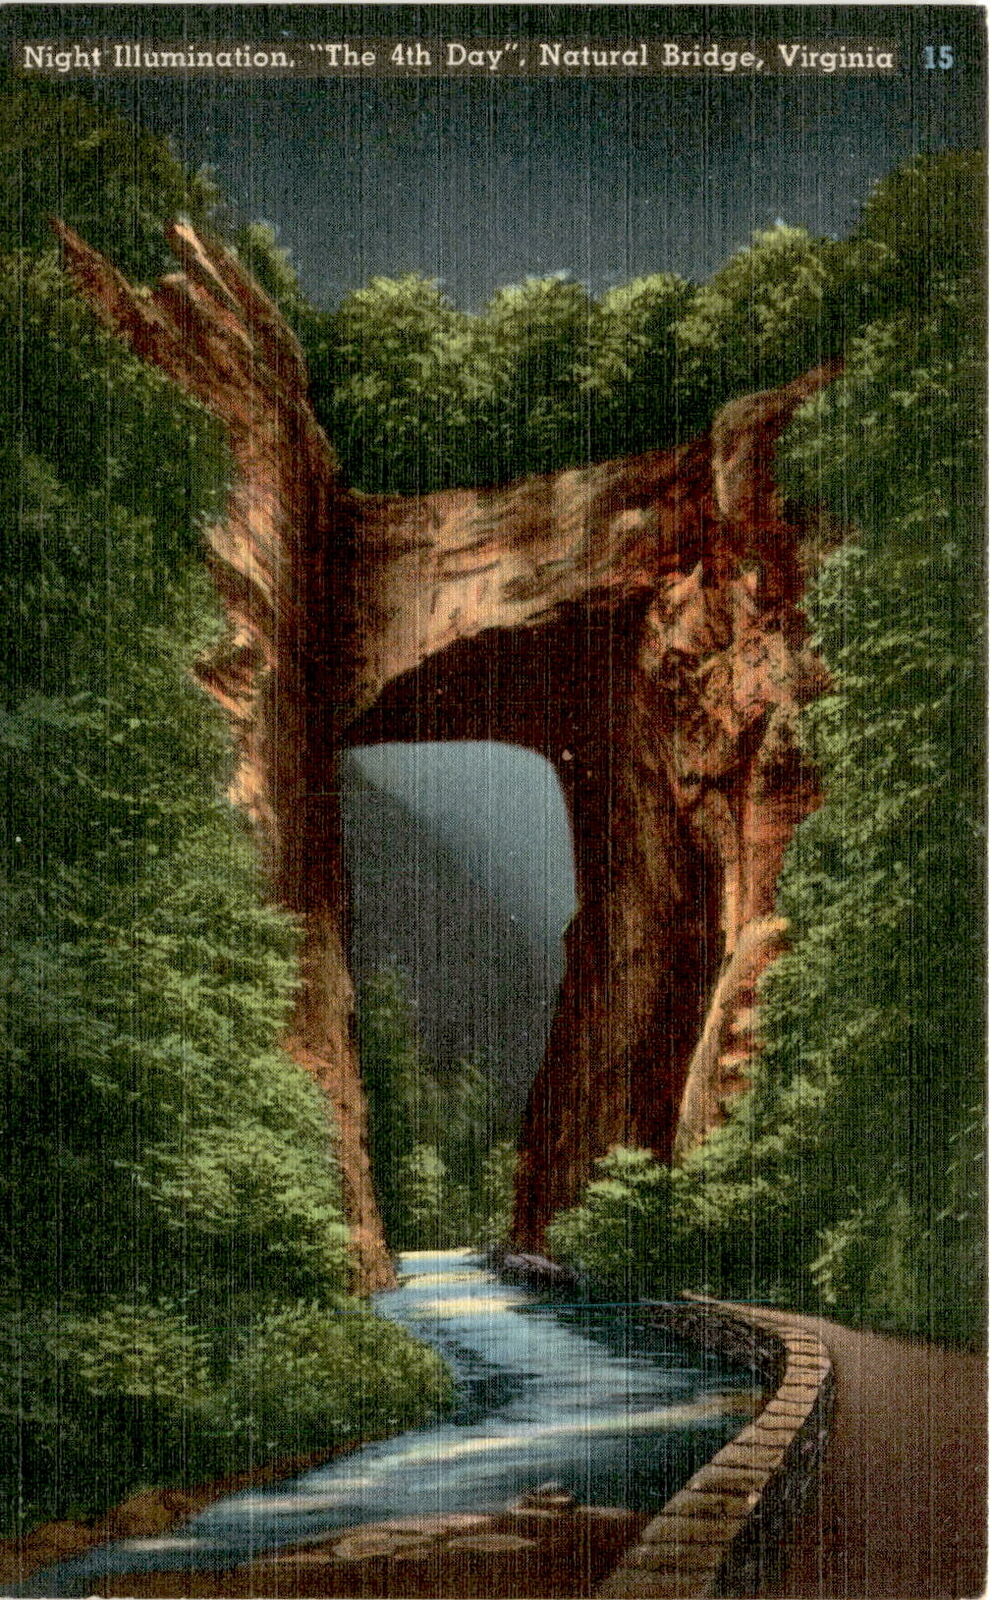 Vintage Natural Bridge of Virginia Postcard - Illumination